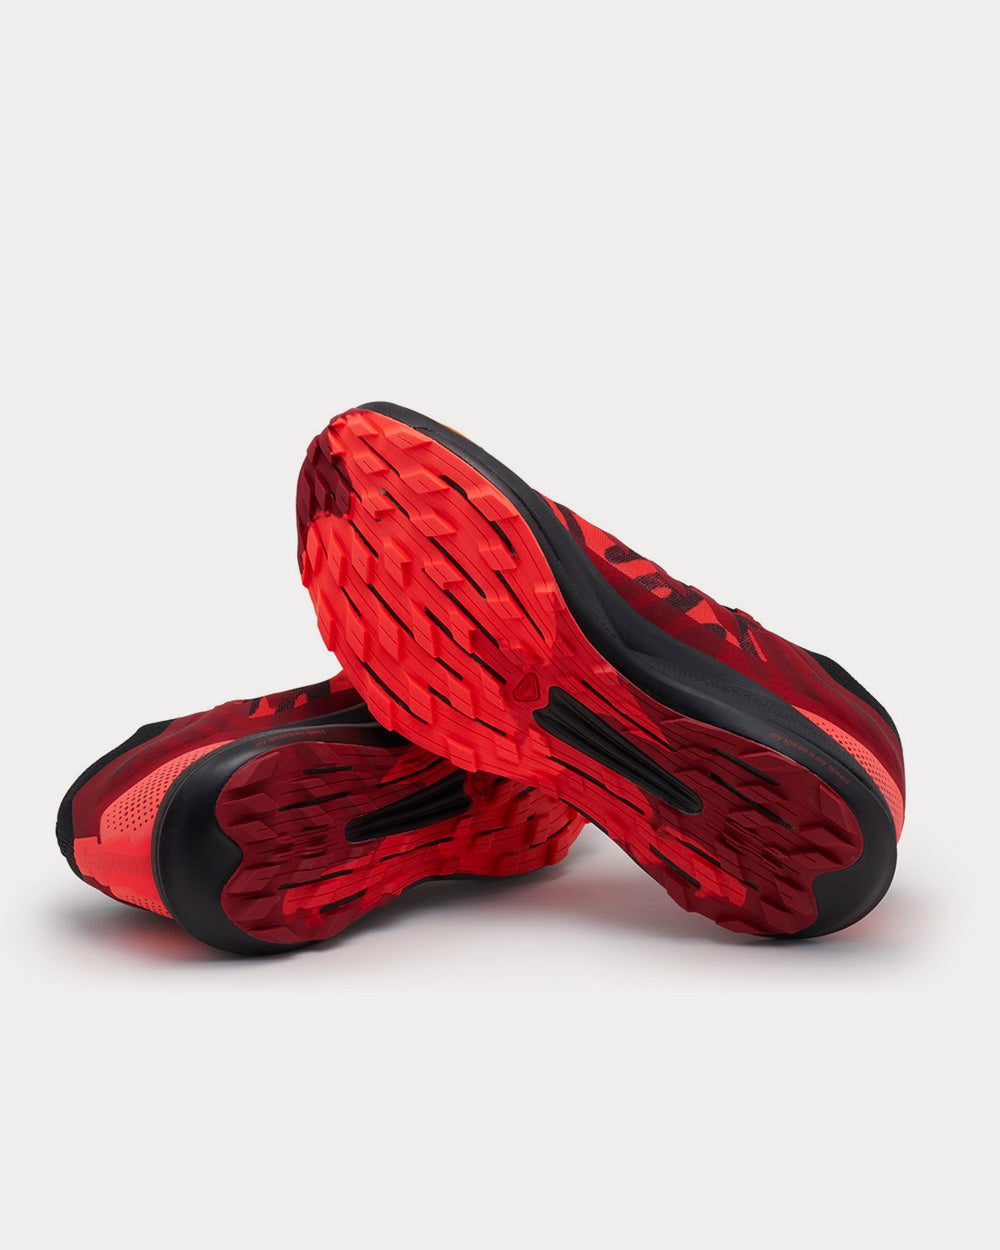 Salomon x Ciele Athletics - Pulsar Trail Pro Black / Fiery Coral / Poppy Red Running Shoes